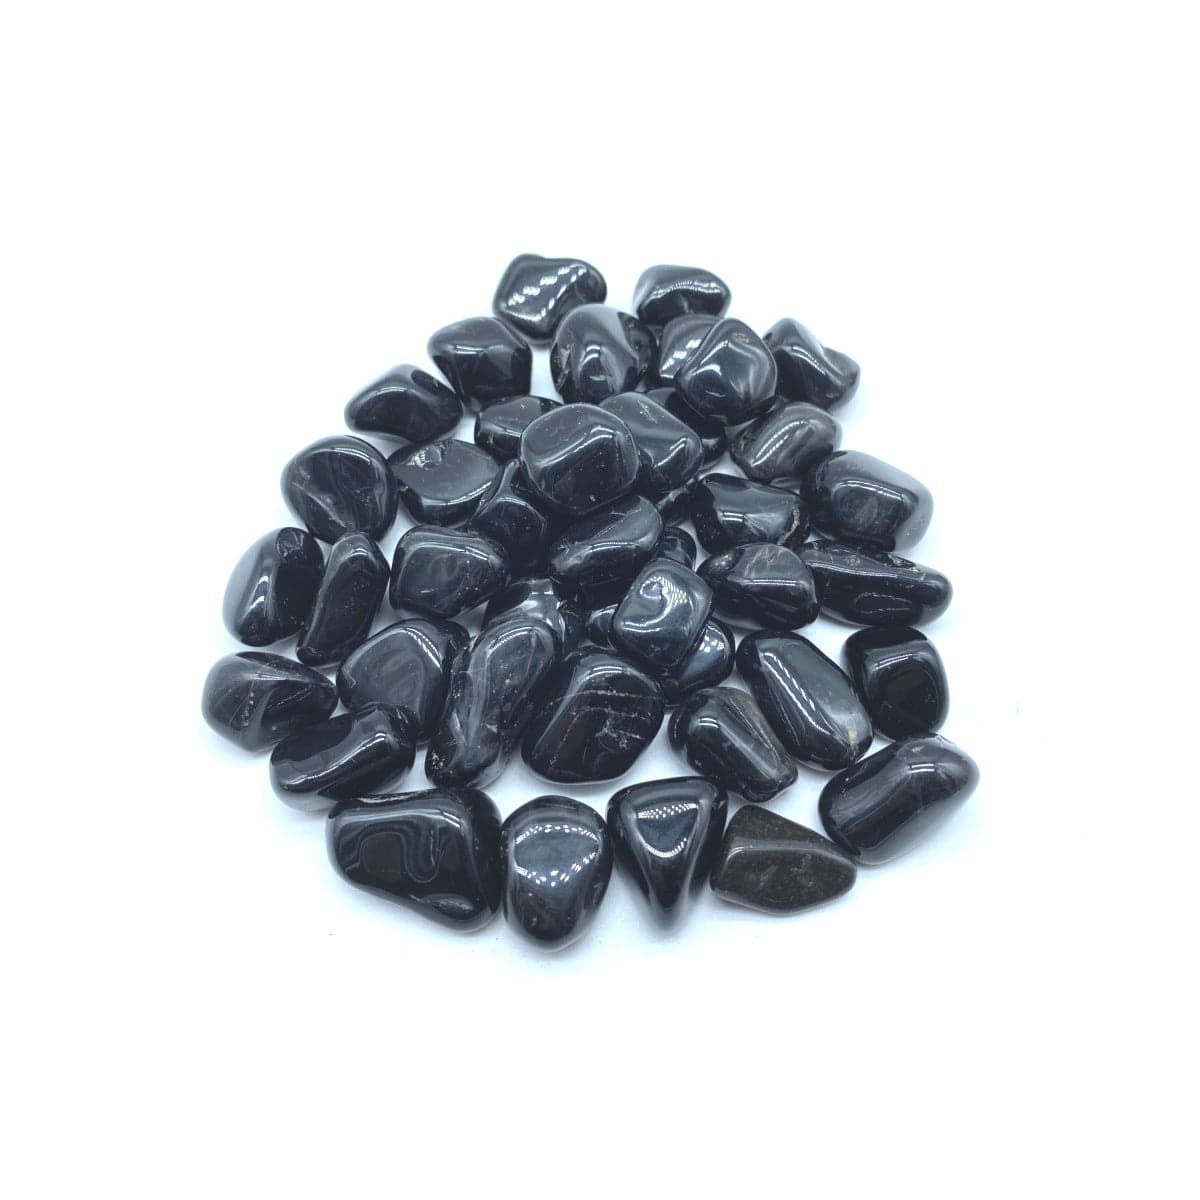 Tumbled black tourmaline – TENET